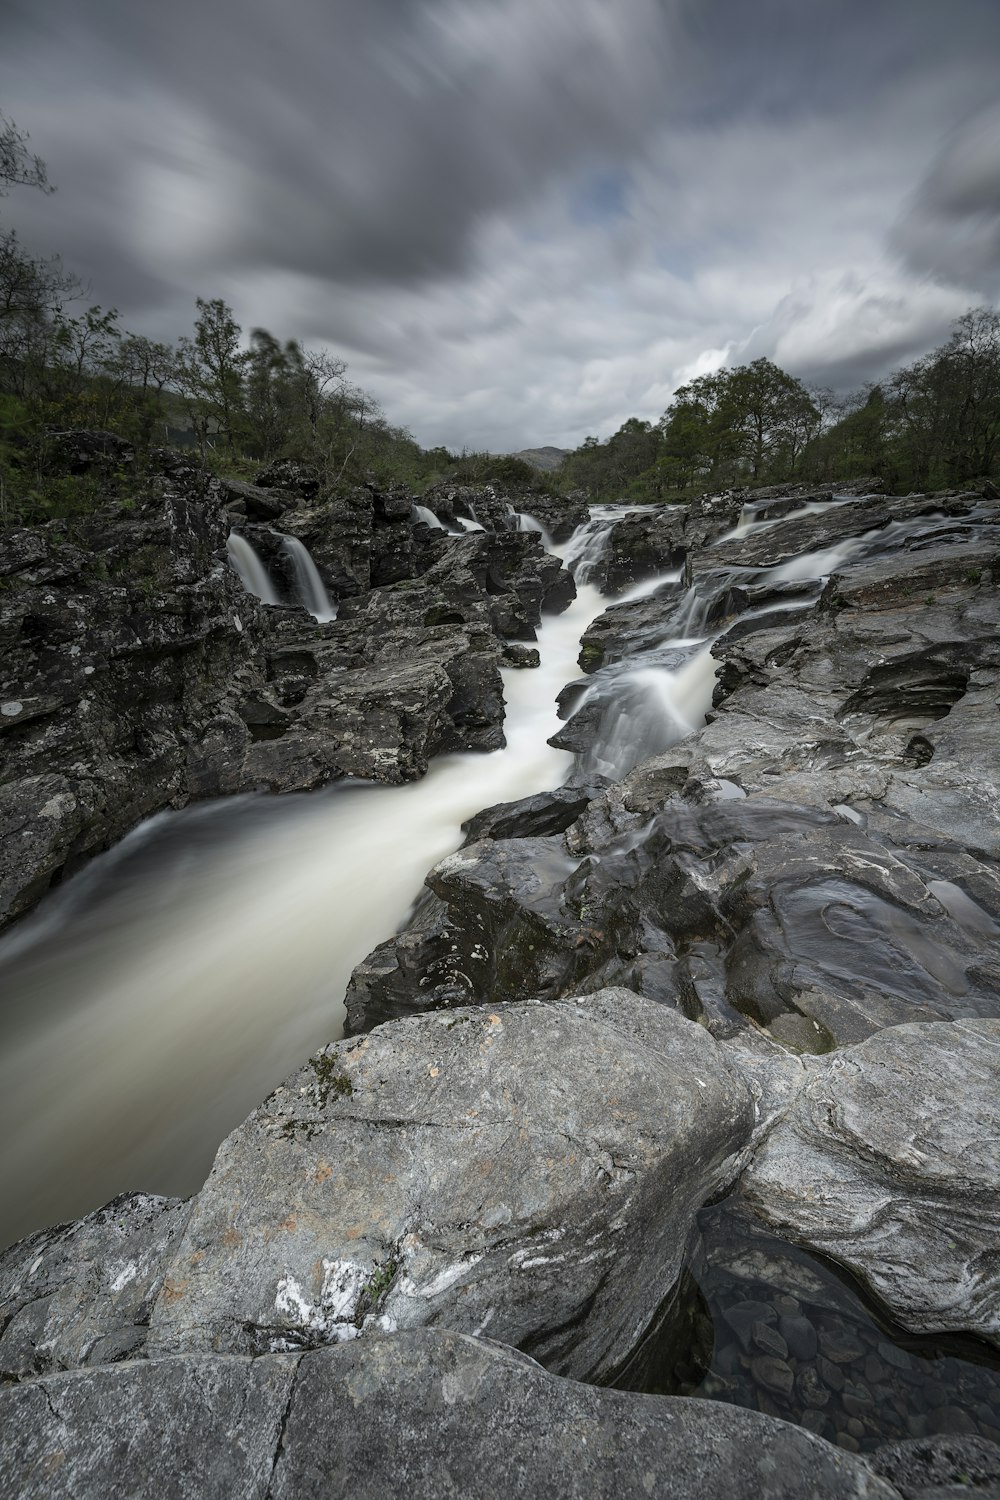 a long exposure photo of a river running between rocks